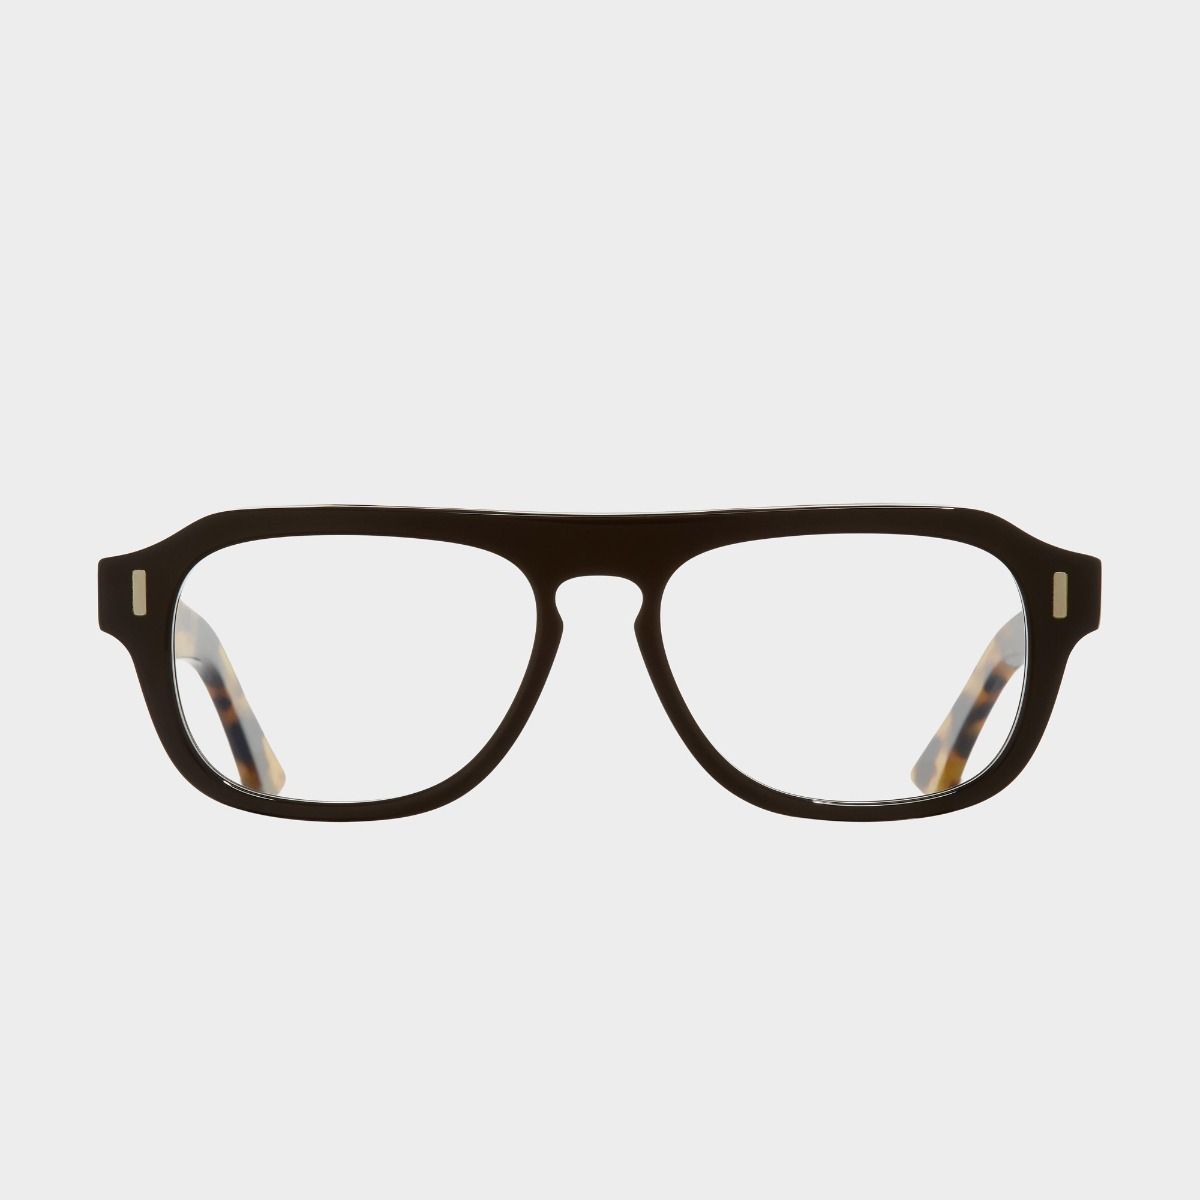 1319 Cutler and Gross, Optical Aviator Glasses - Black on Camo